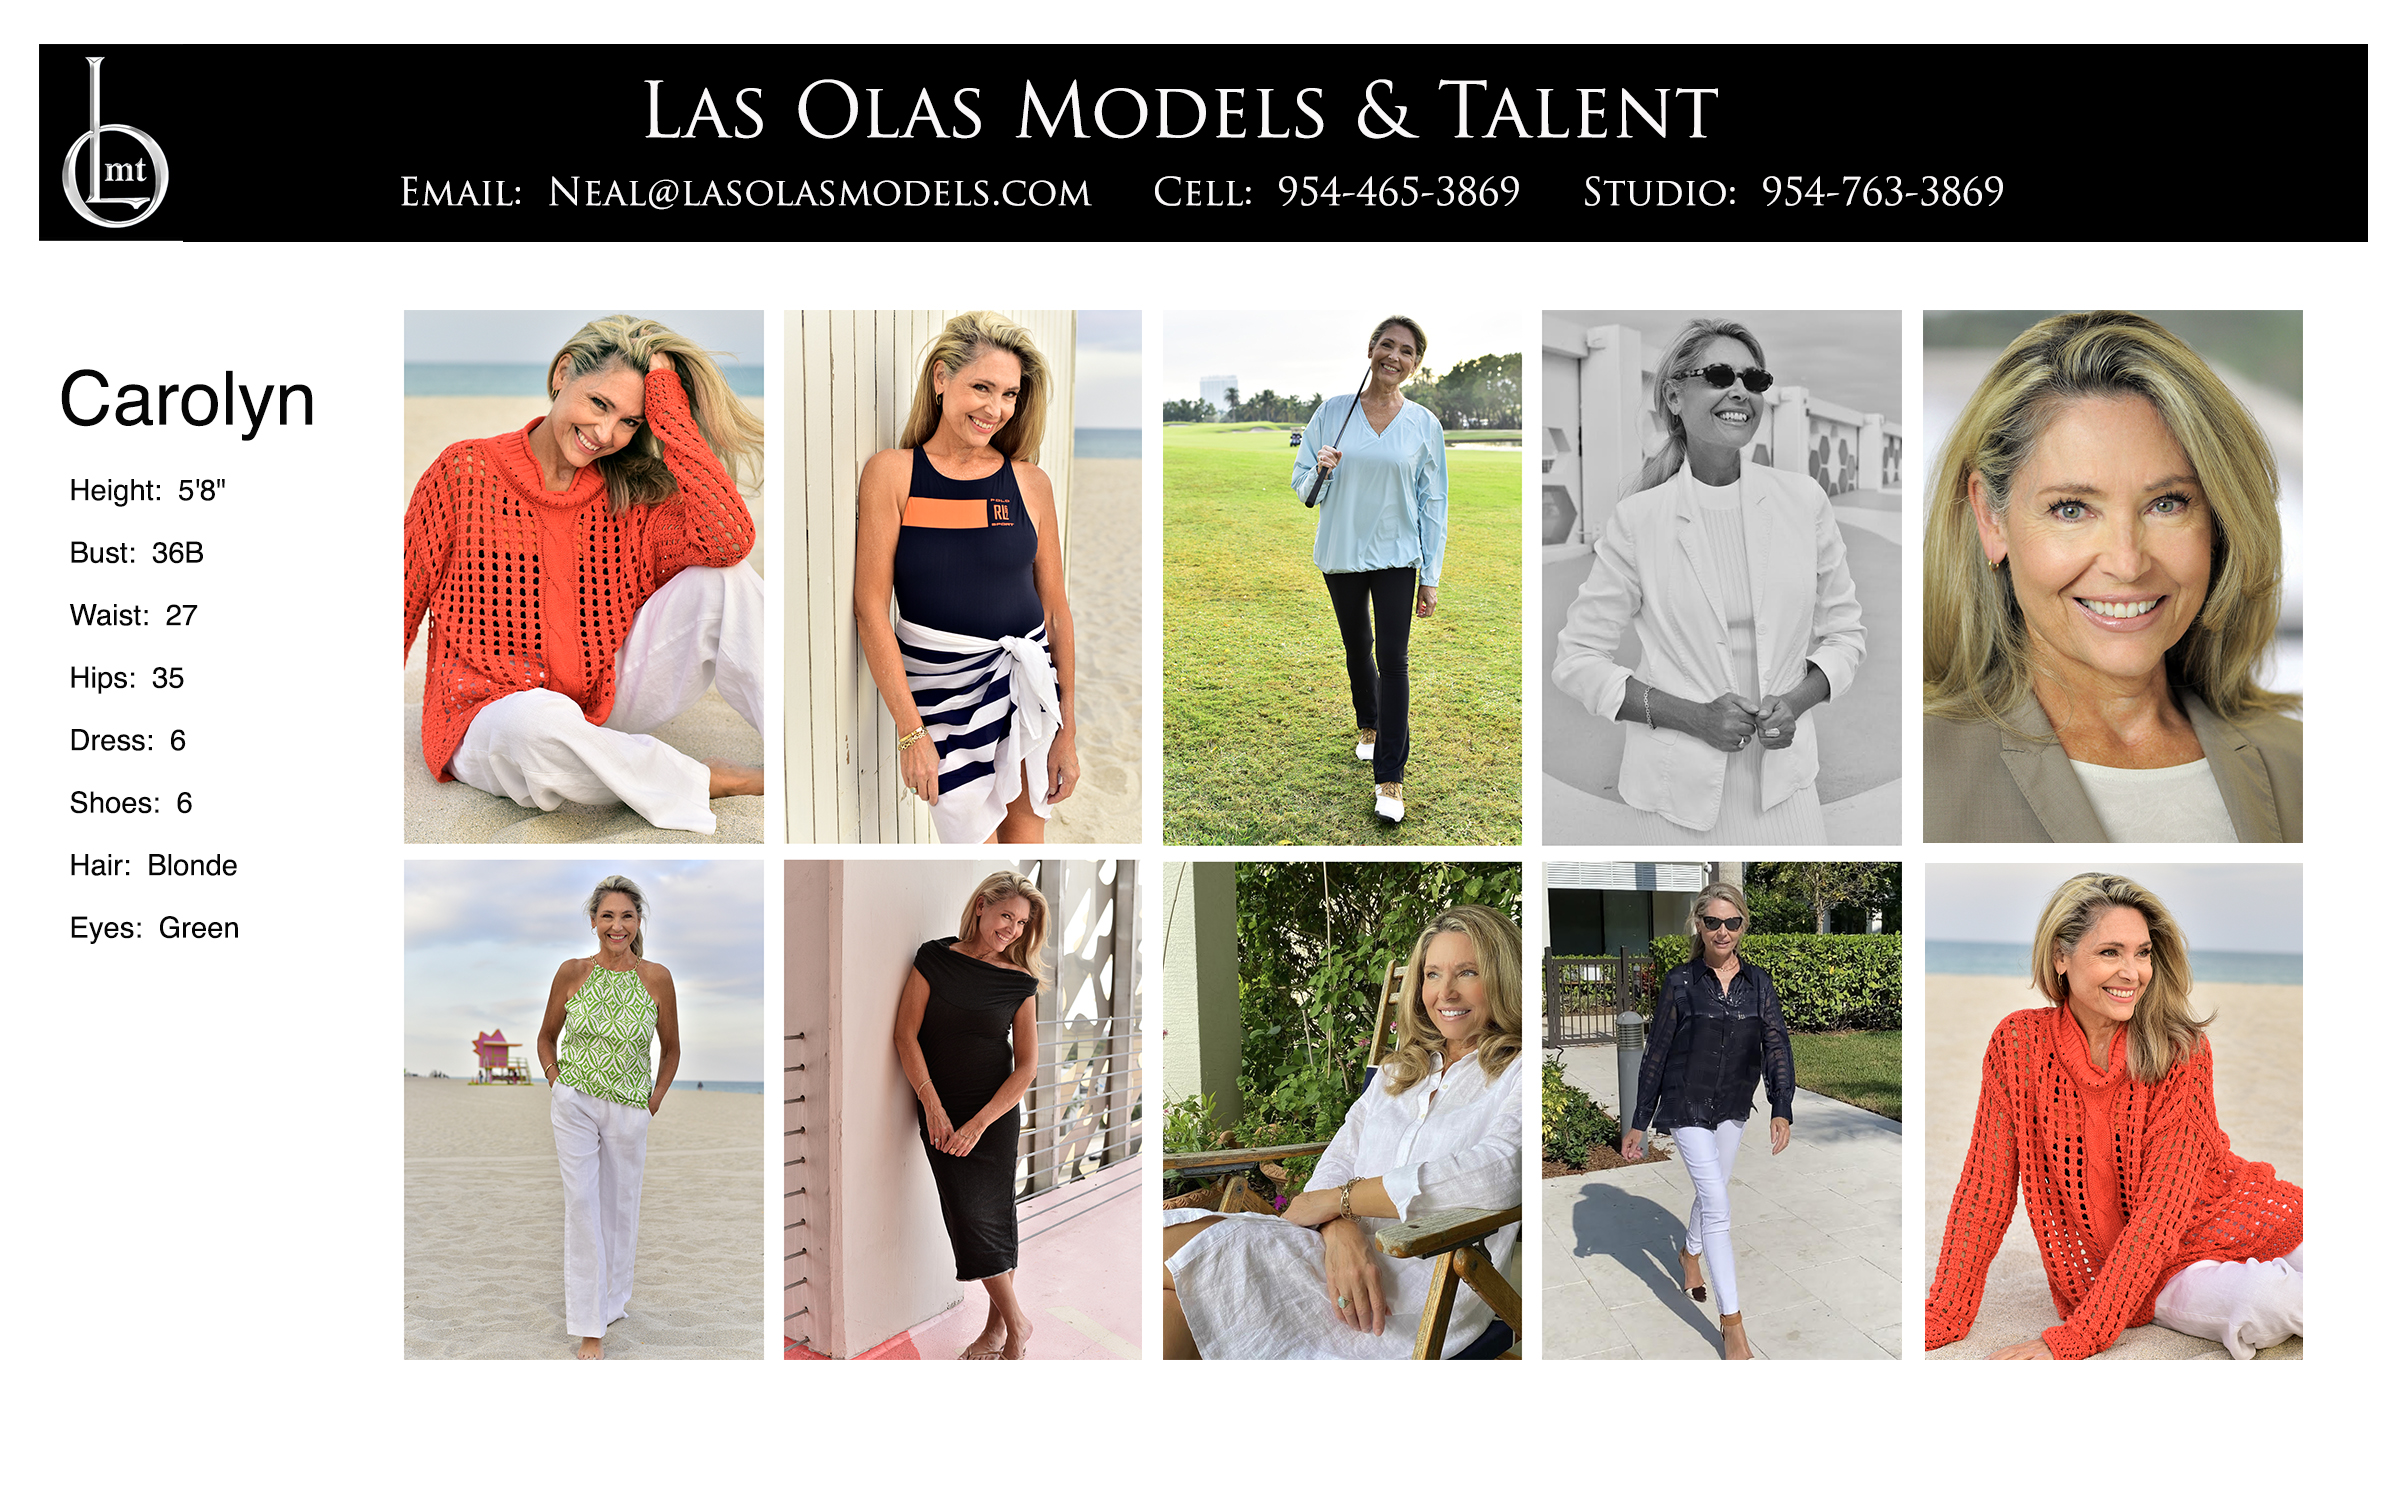 Models Fort Lauderdale Miami South Florida - Print Video Commercial Catalog - Las Olas Models & Talent - Carolyn Comp